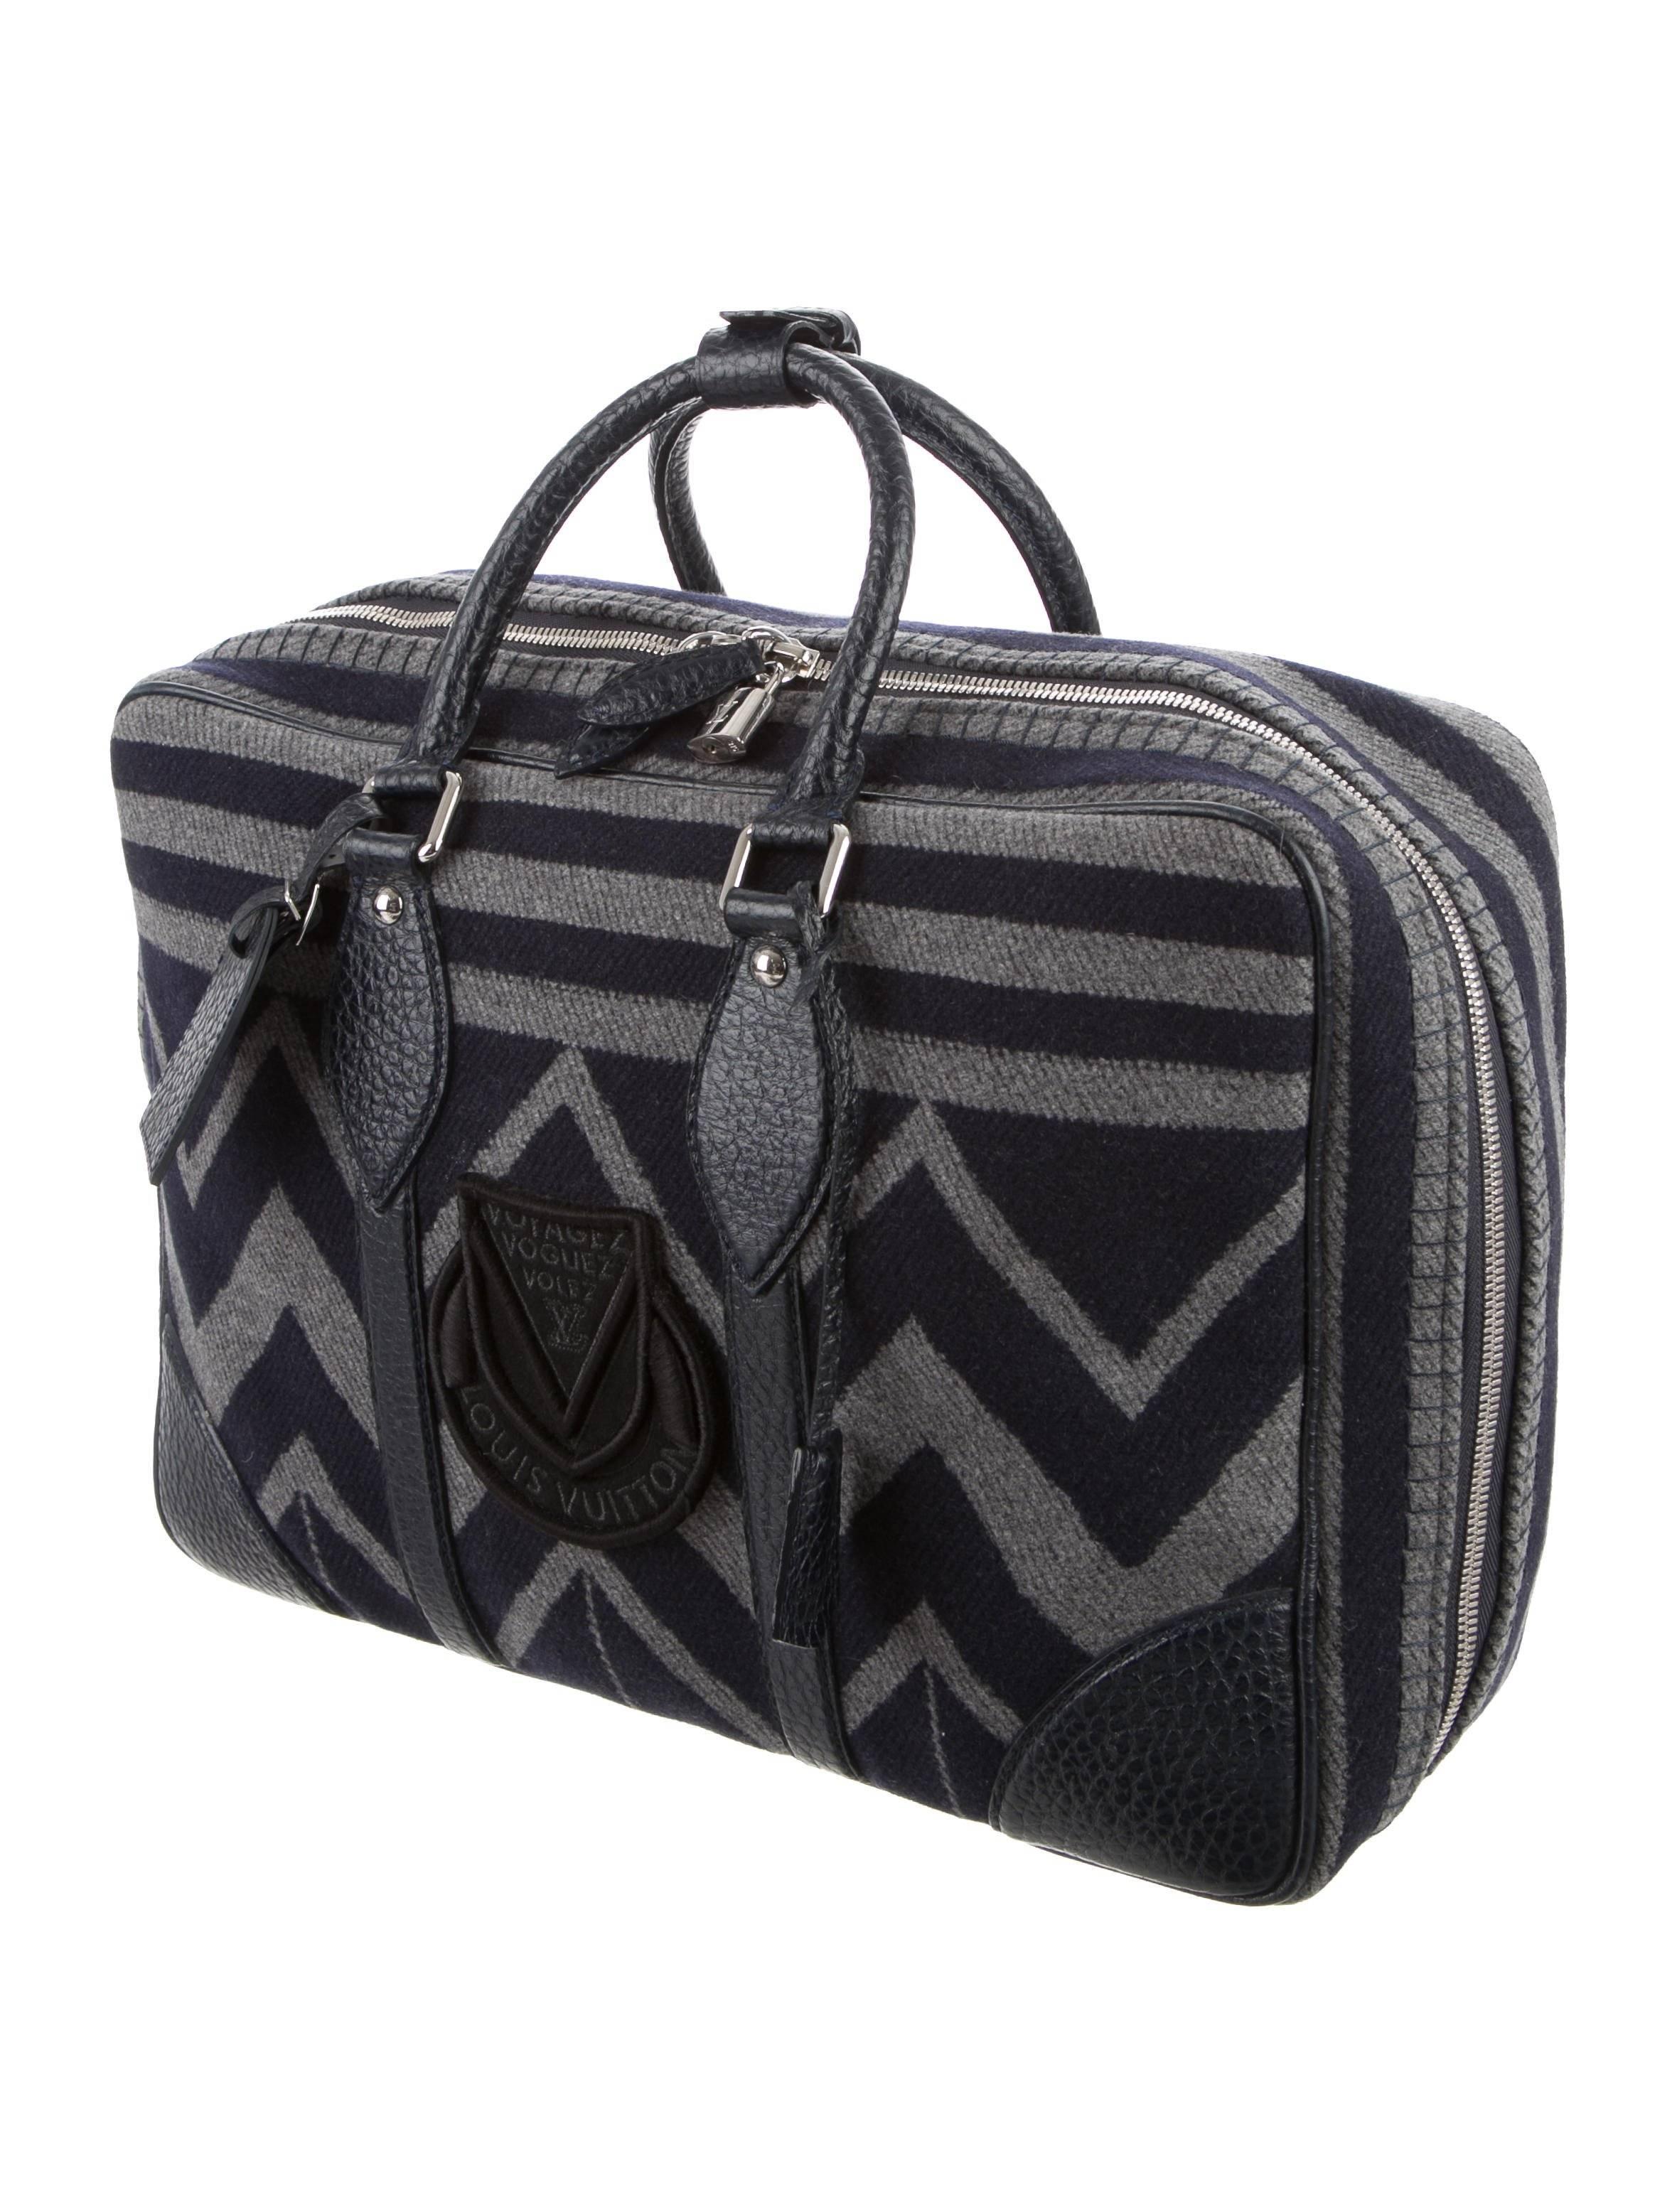 Black Louis Vuitton Limited Edition Wool Top Handle Travel Weekender Carryall Bag